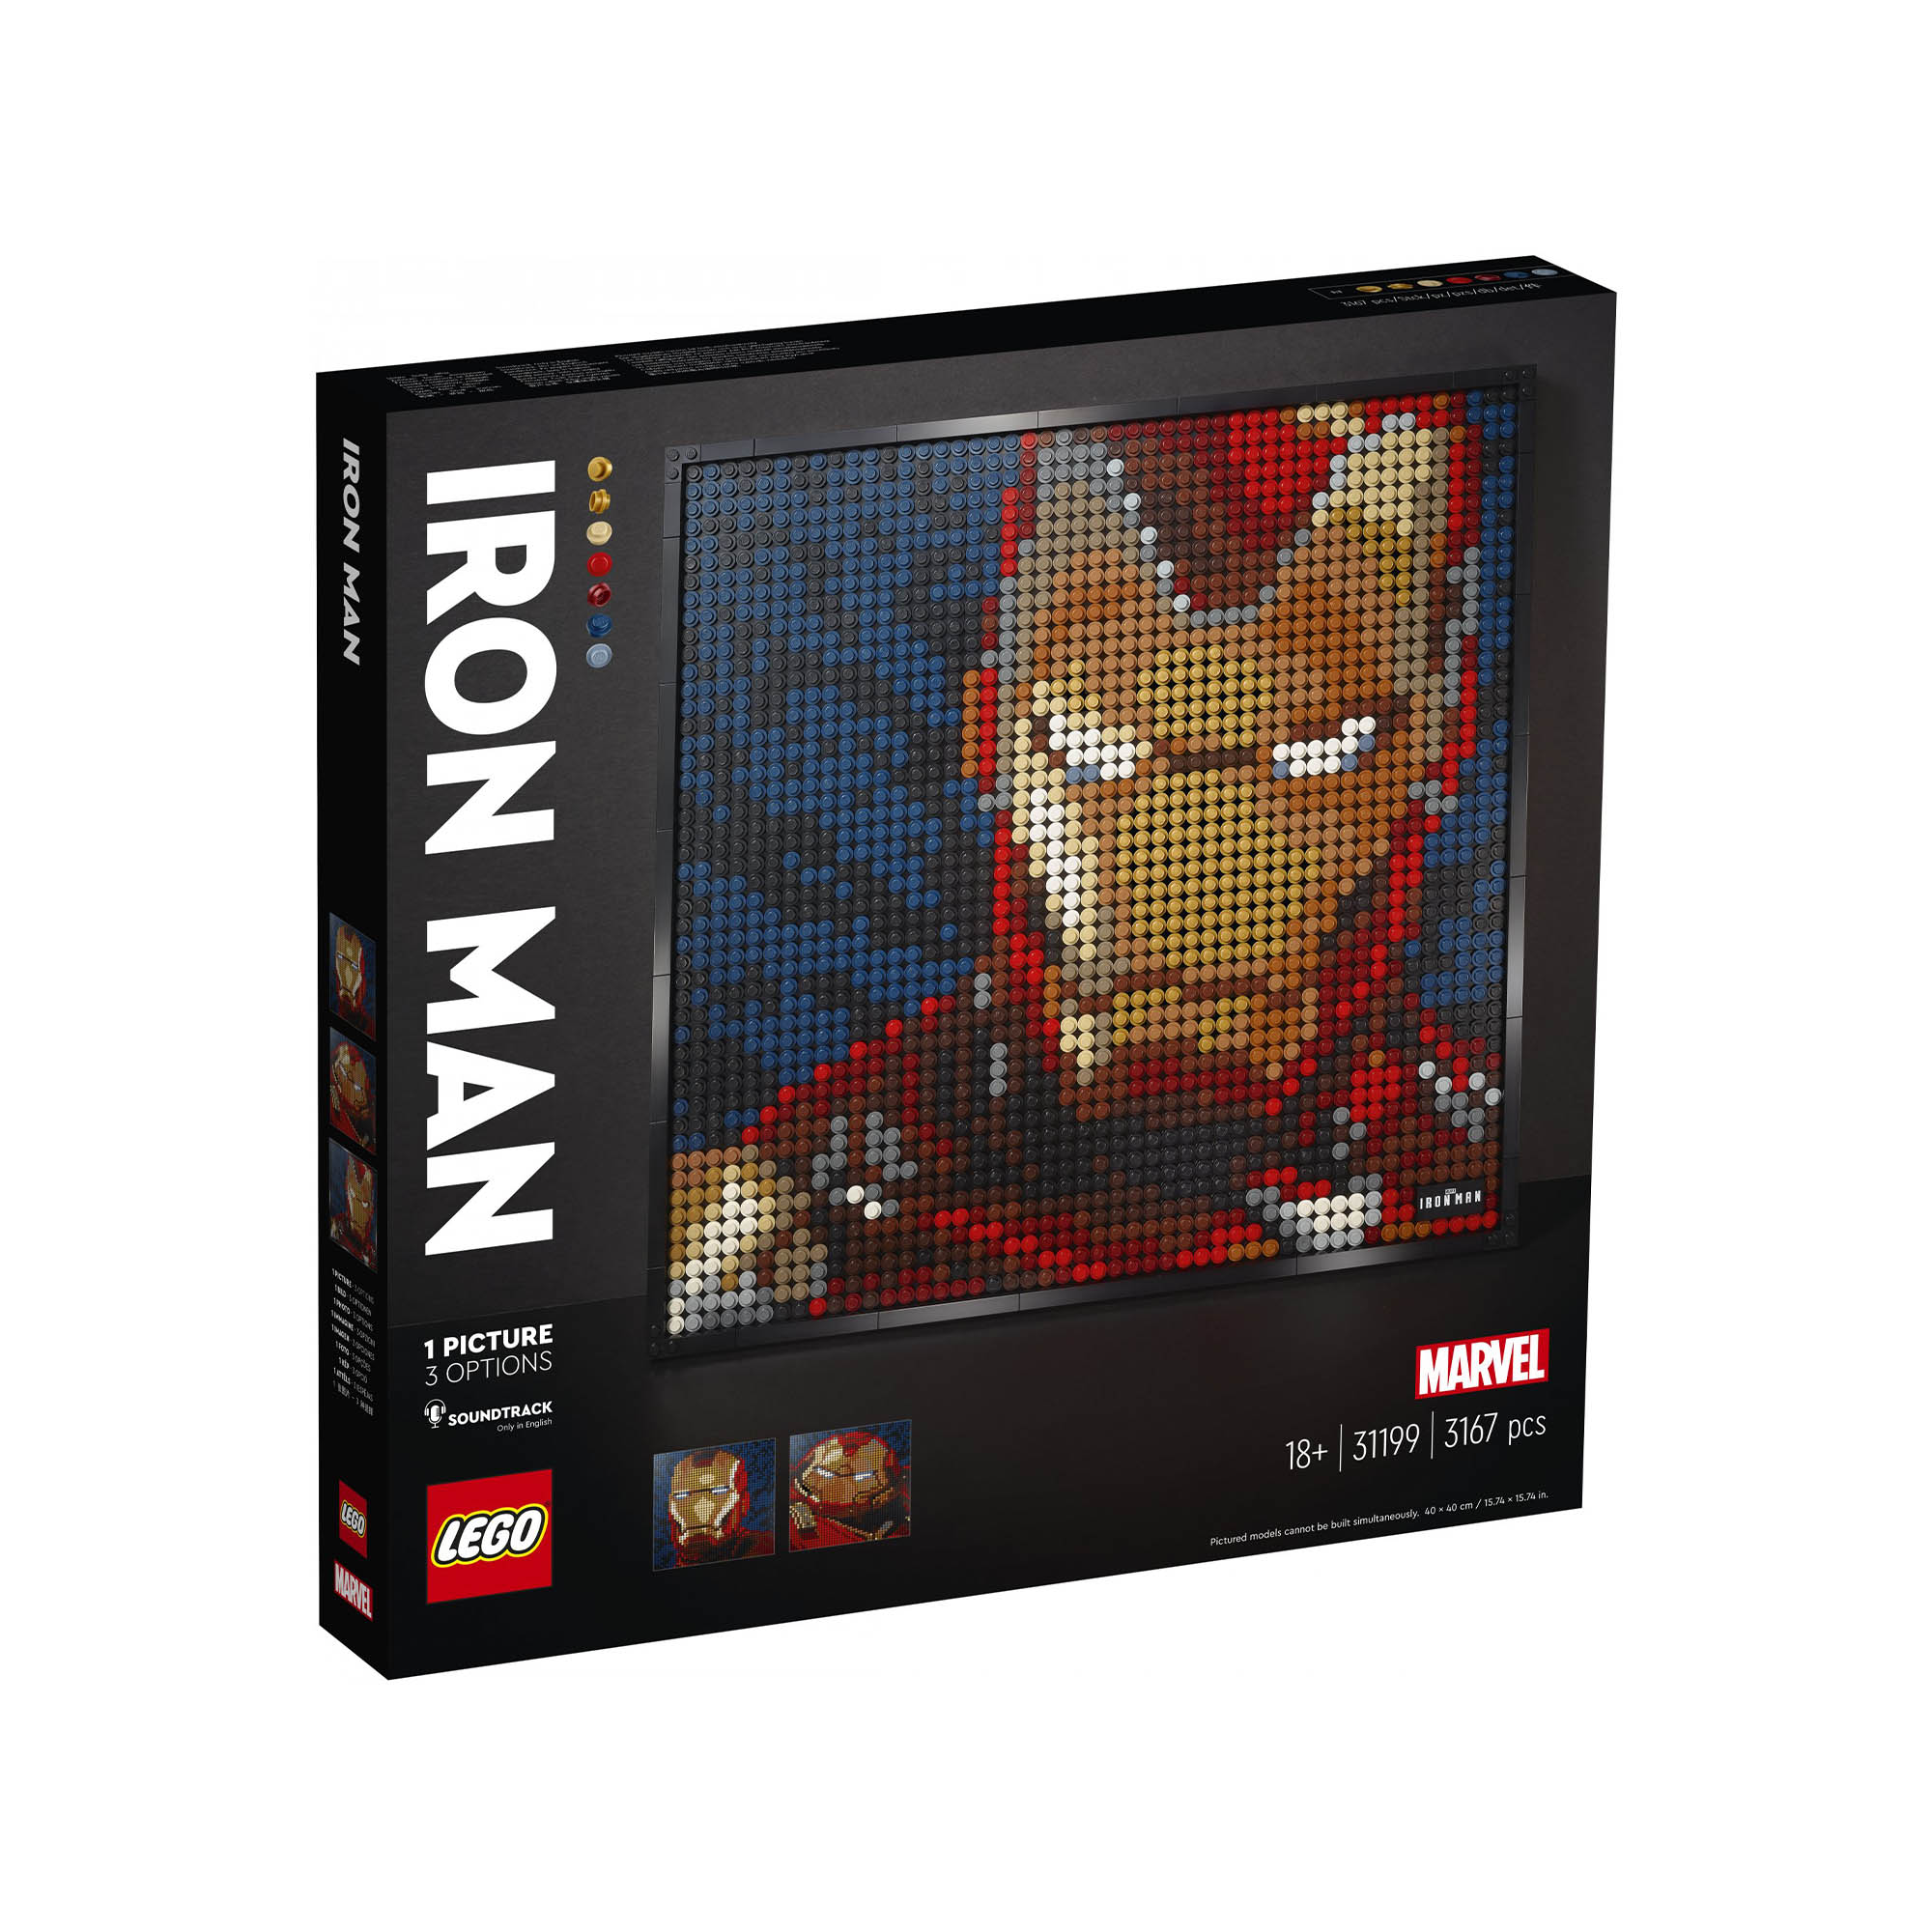 Iron Man - Marvel Studios 31199, , large